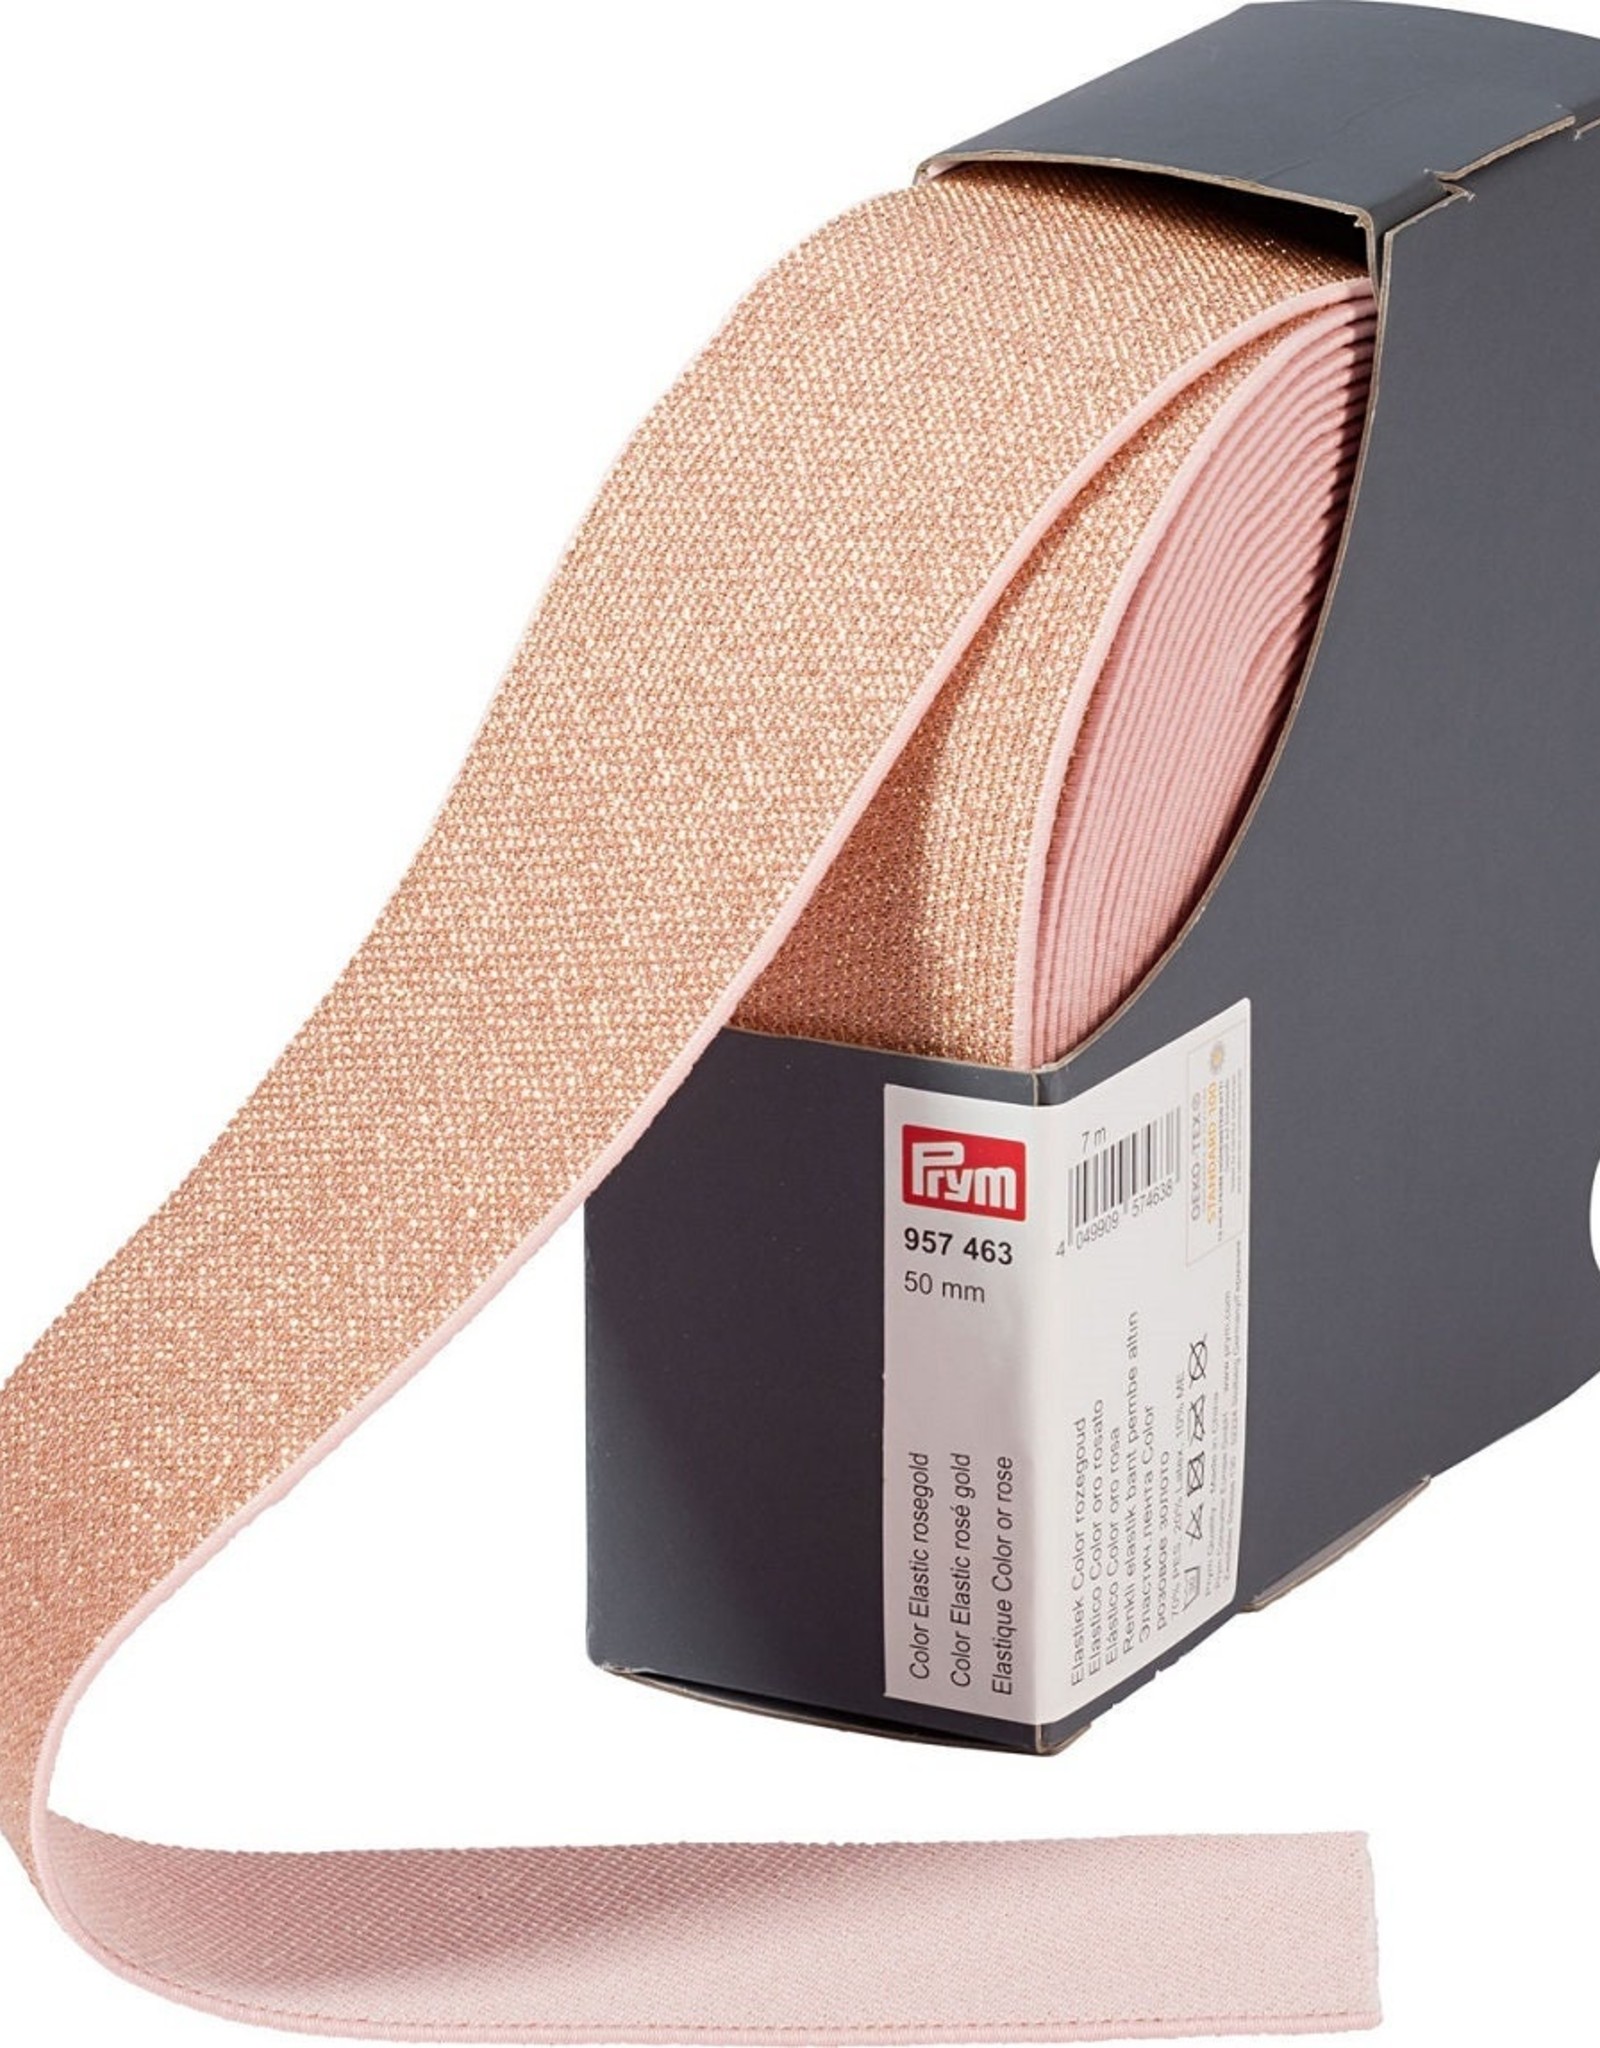 Prym Prym - Taille elastiek rose goud 50mm - 957 463